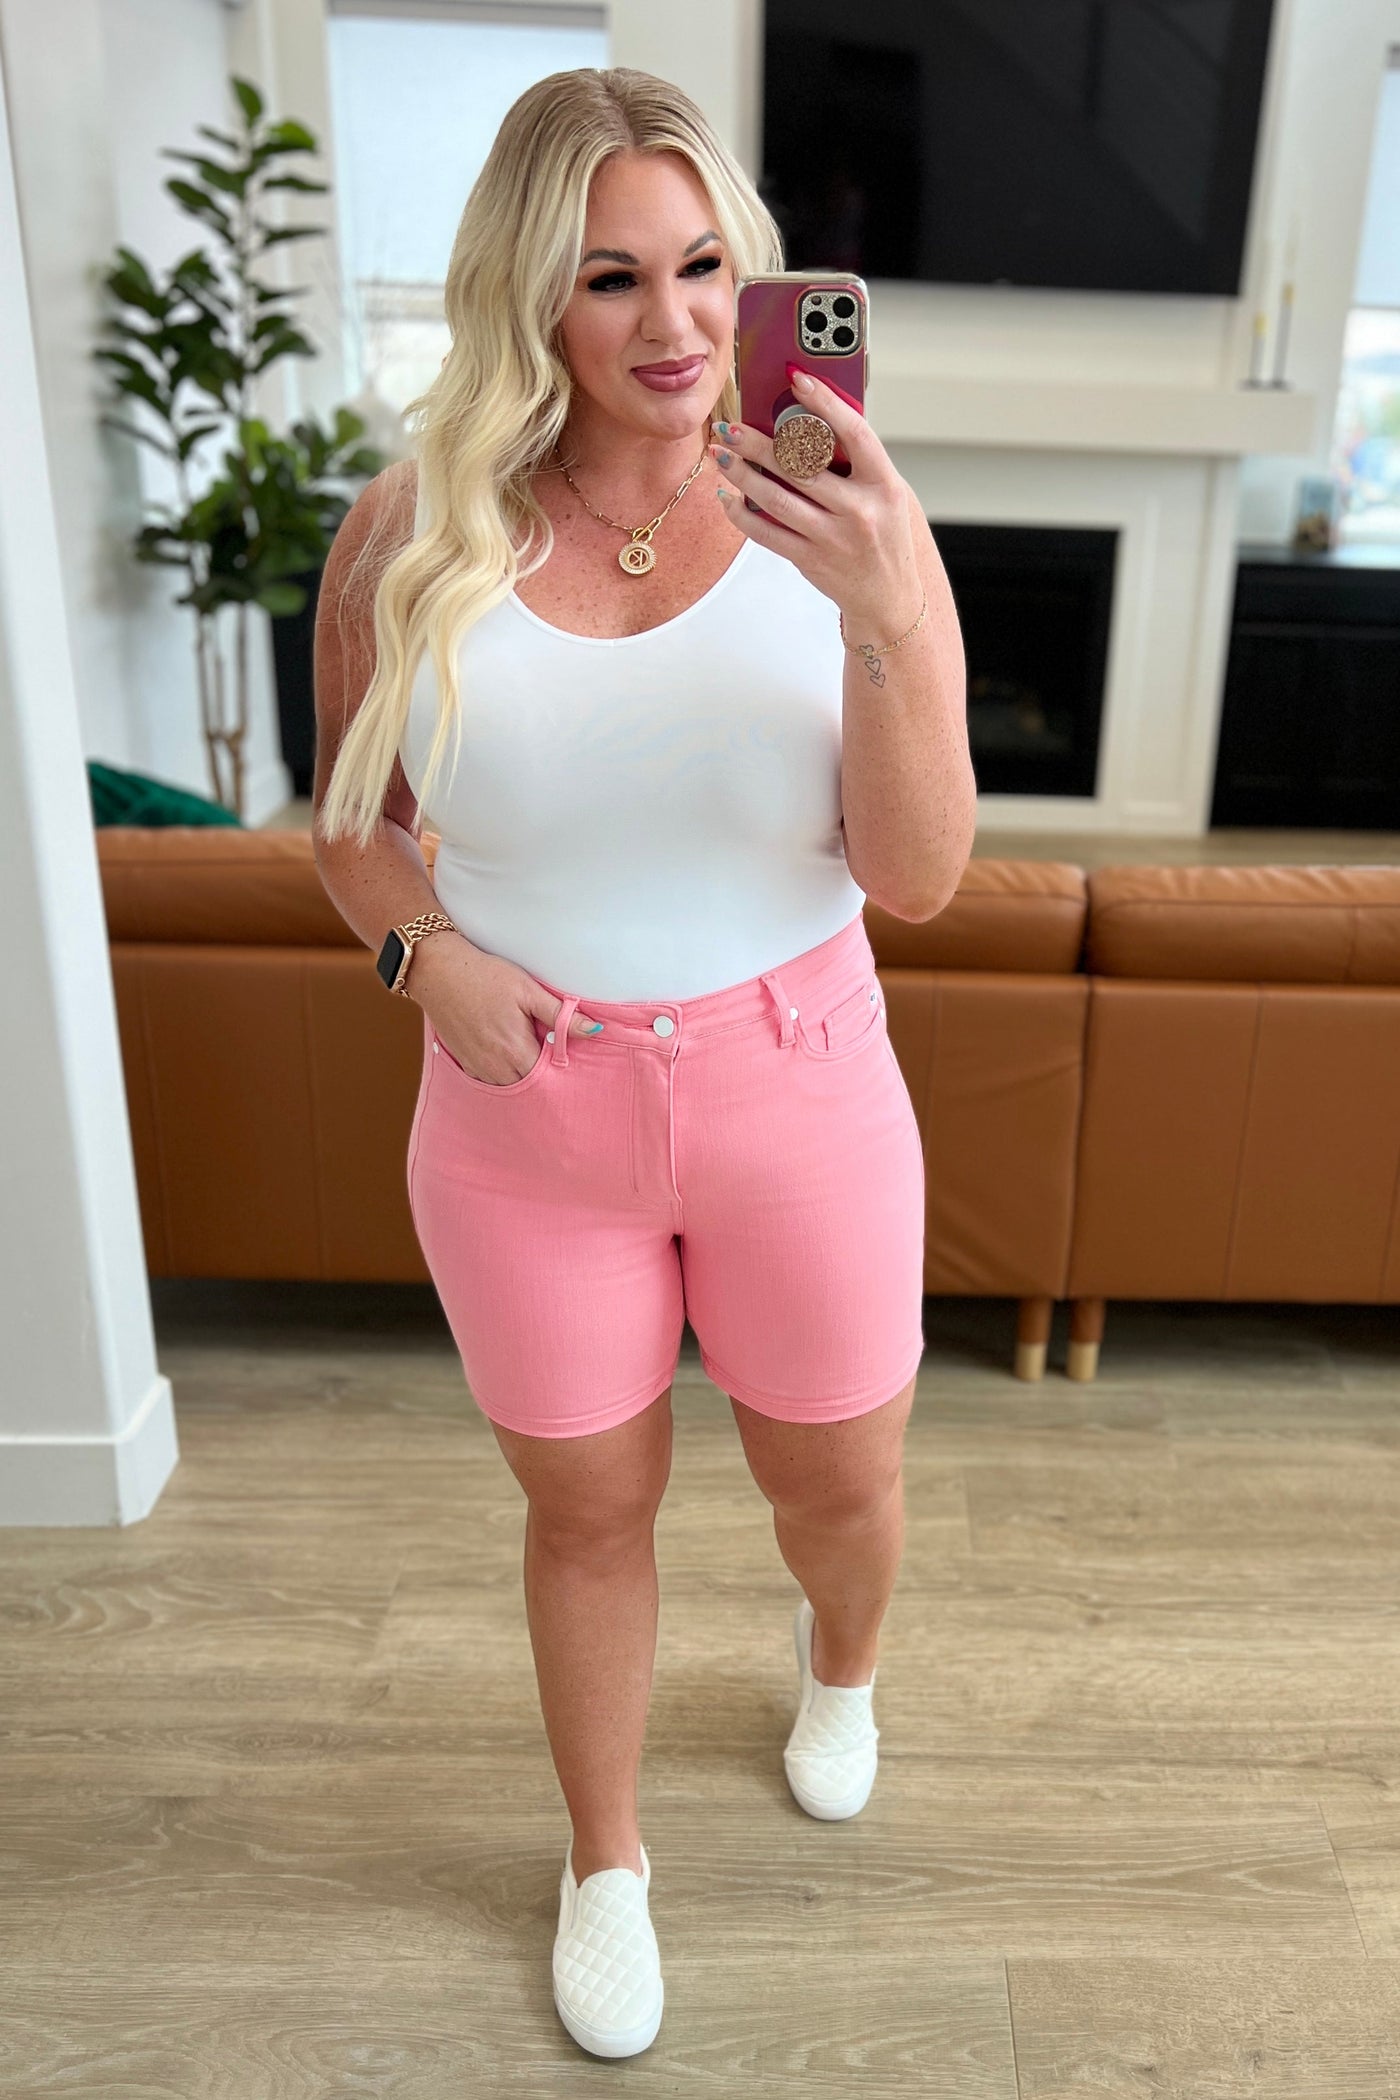 Judy Blue | Jenna High Rise Control Top Cuffed Shorts in Pink